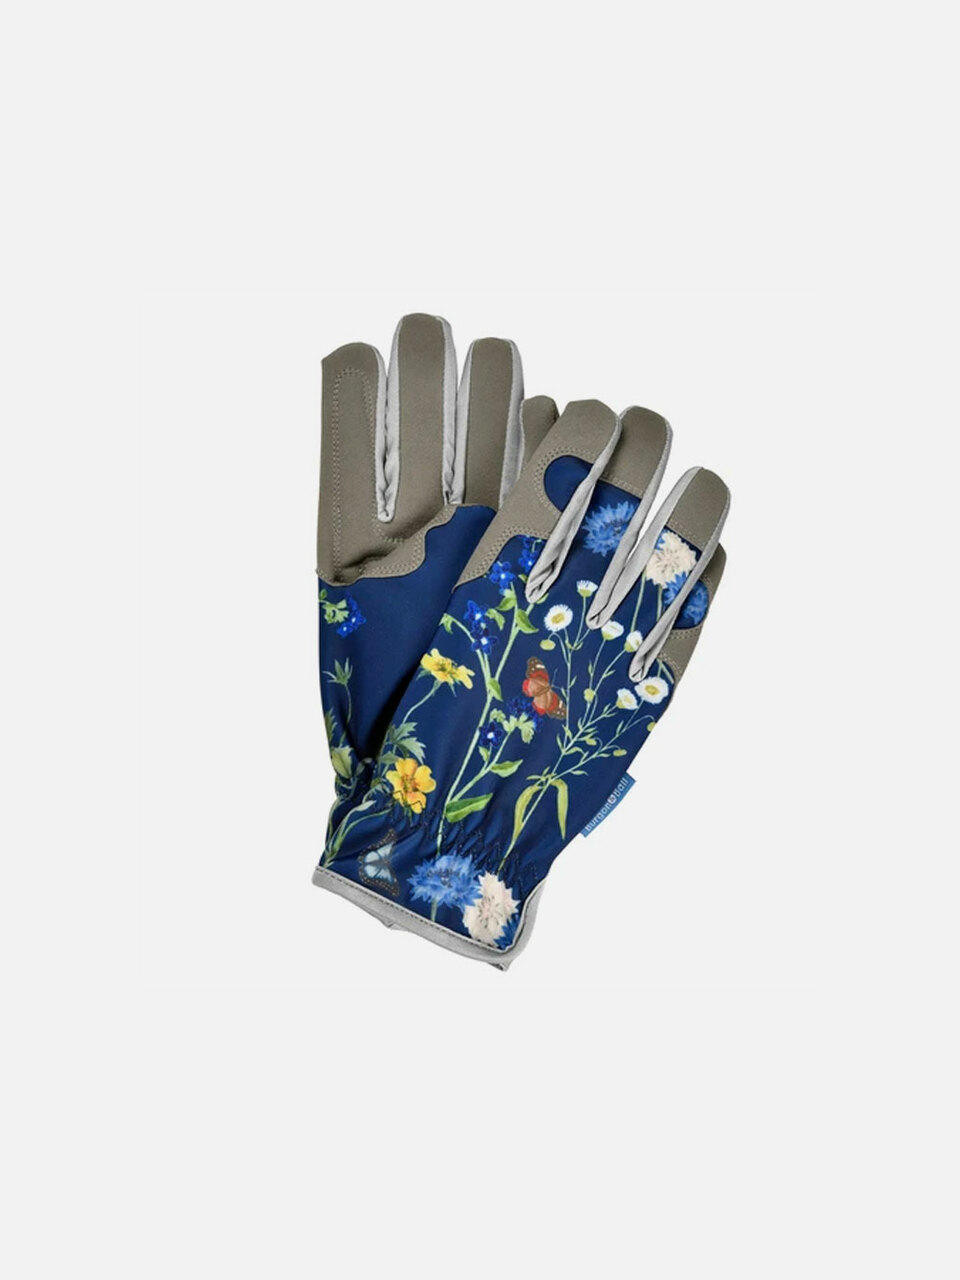 Burgon and Ball Womens Gardening Gloves - British Meadow design